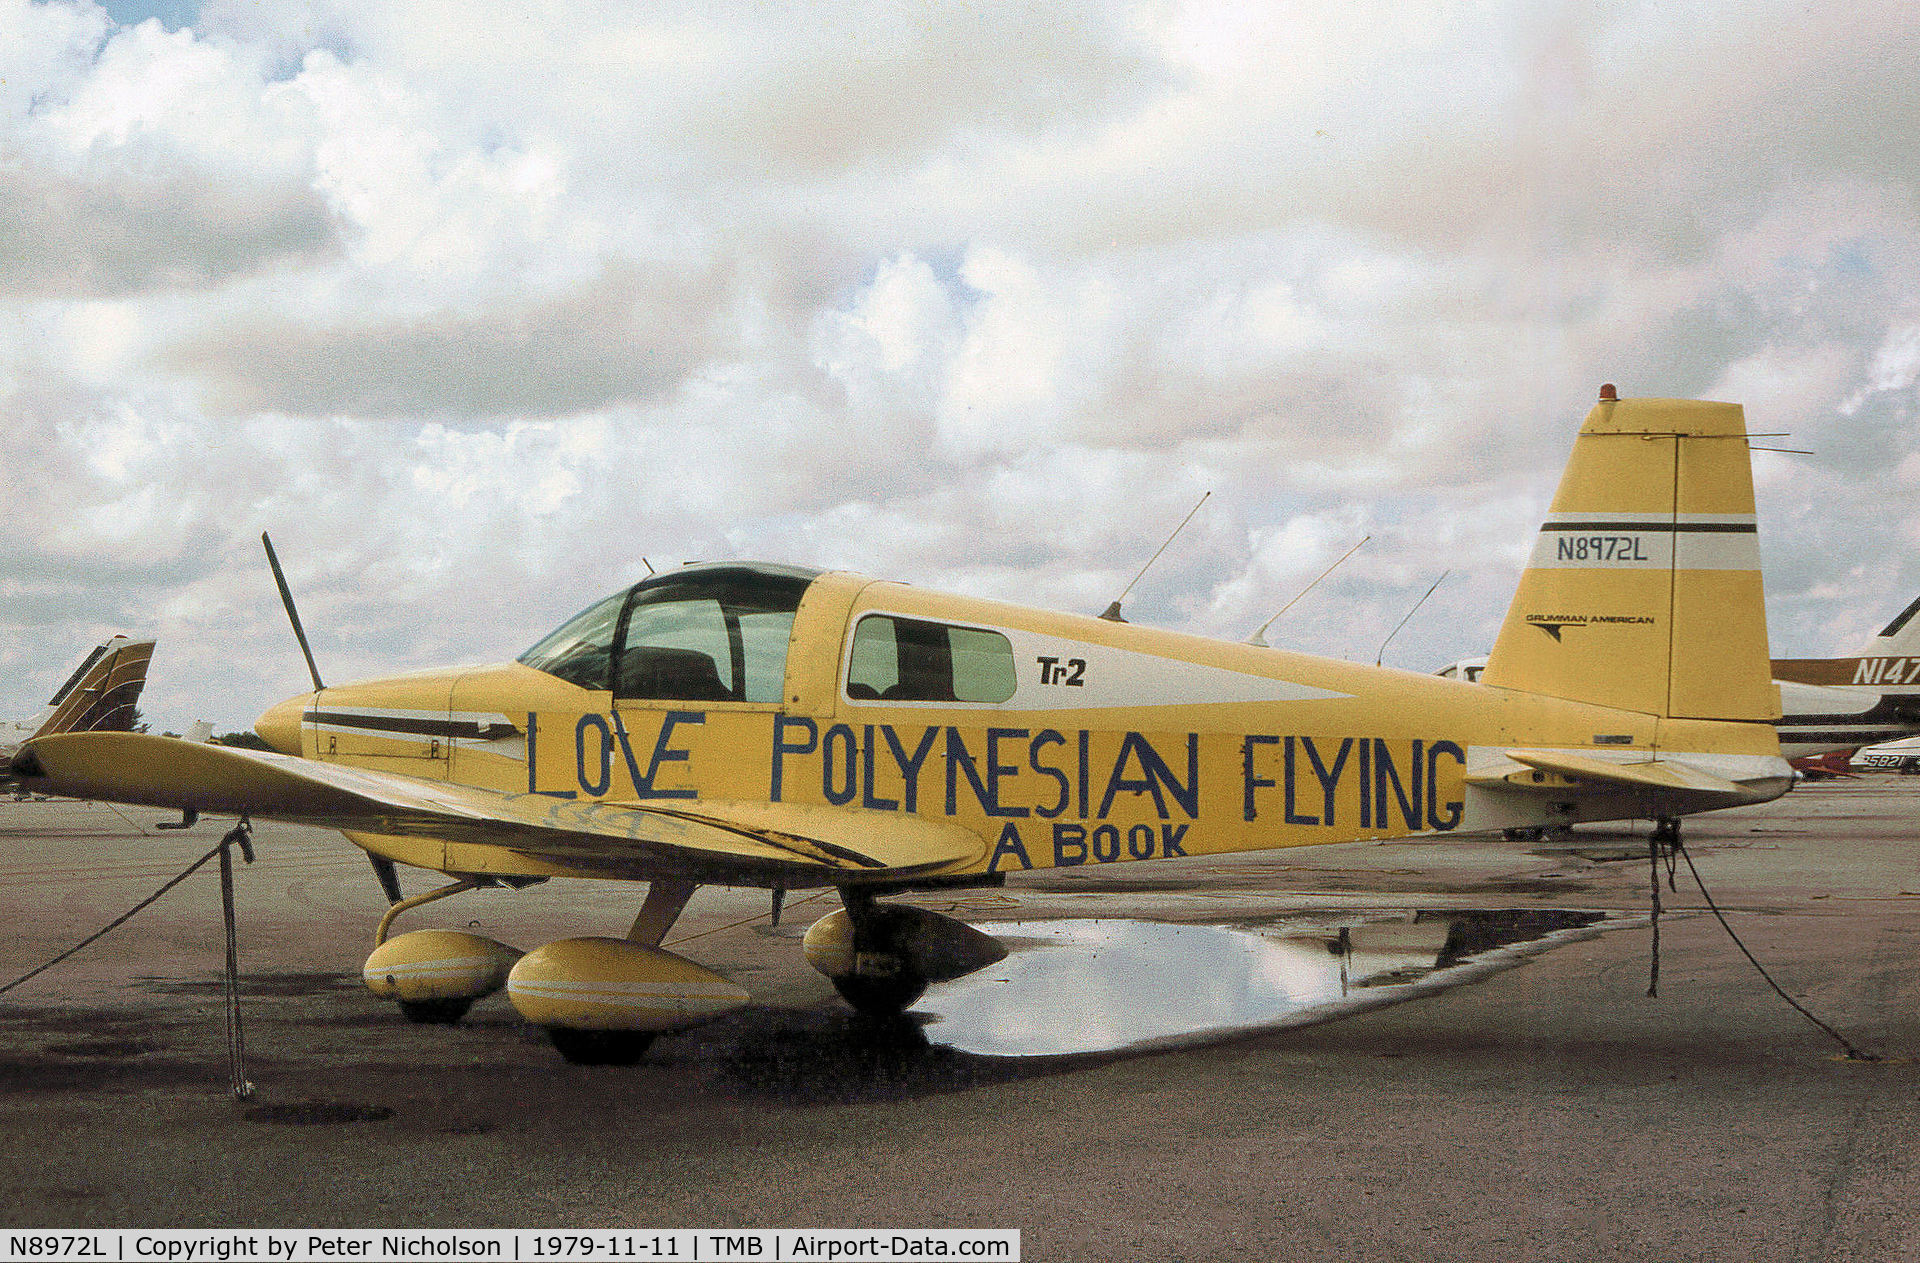 N8972L, 1974 Grumman American AA-1B Trainer C/N AA1B-0422, AA-1B Tr2 seen at New Tamiami in November 1979.